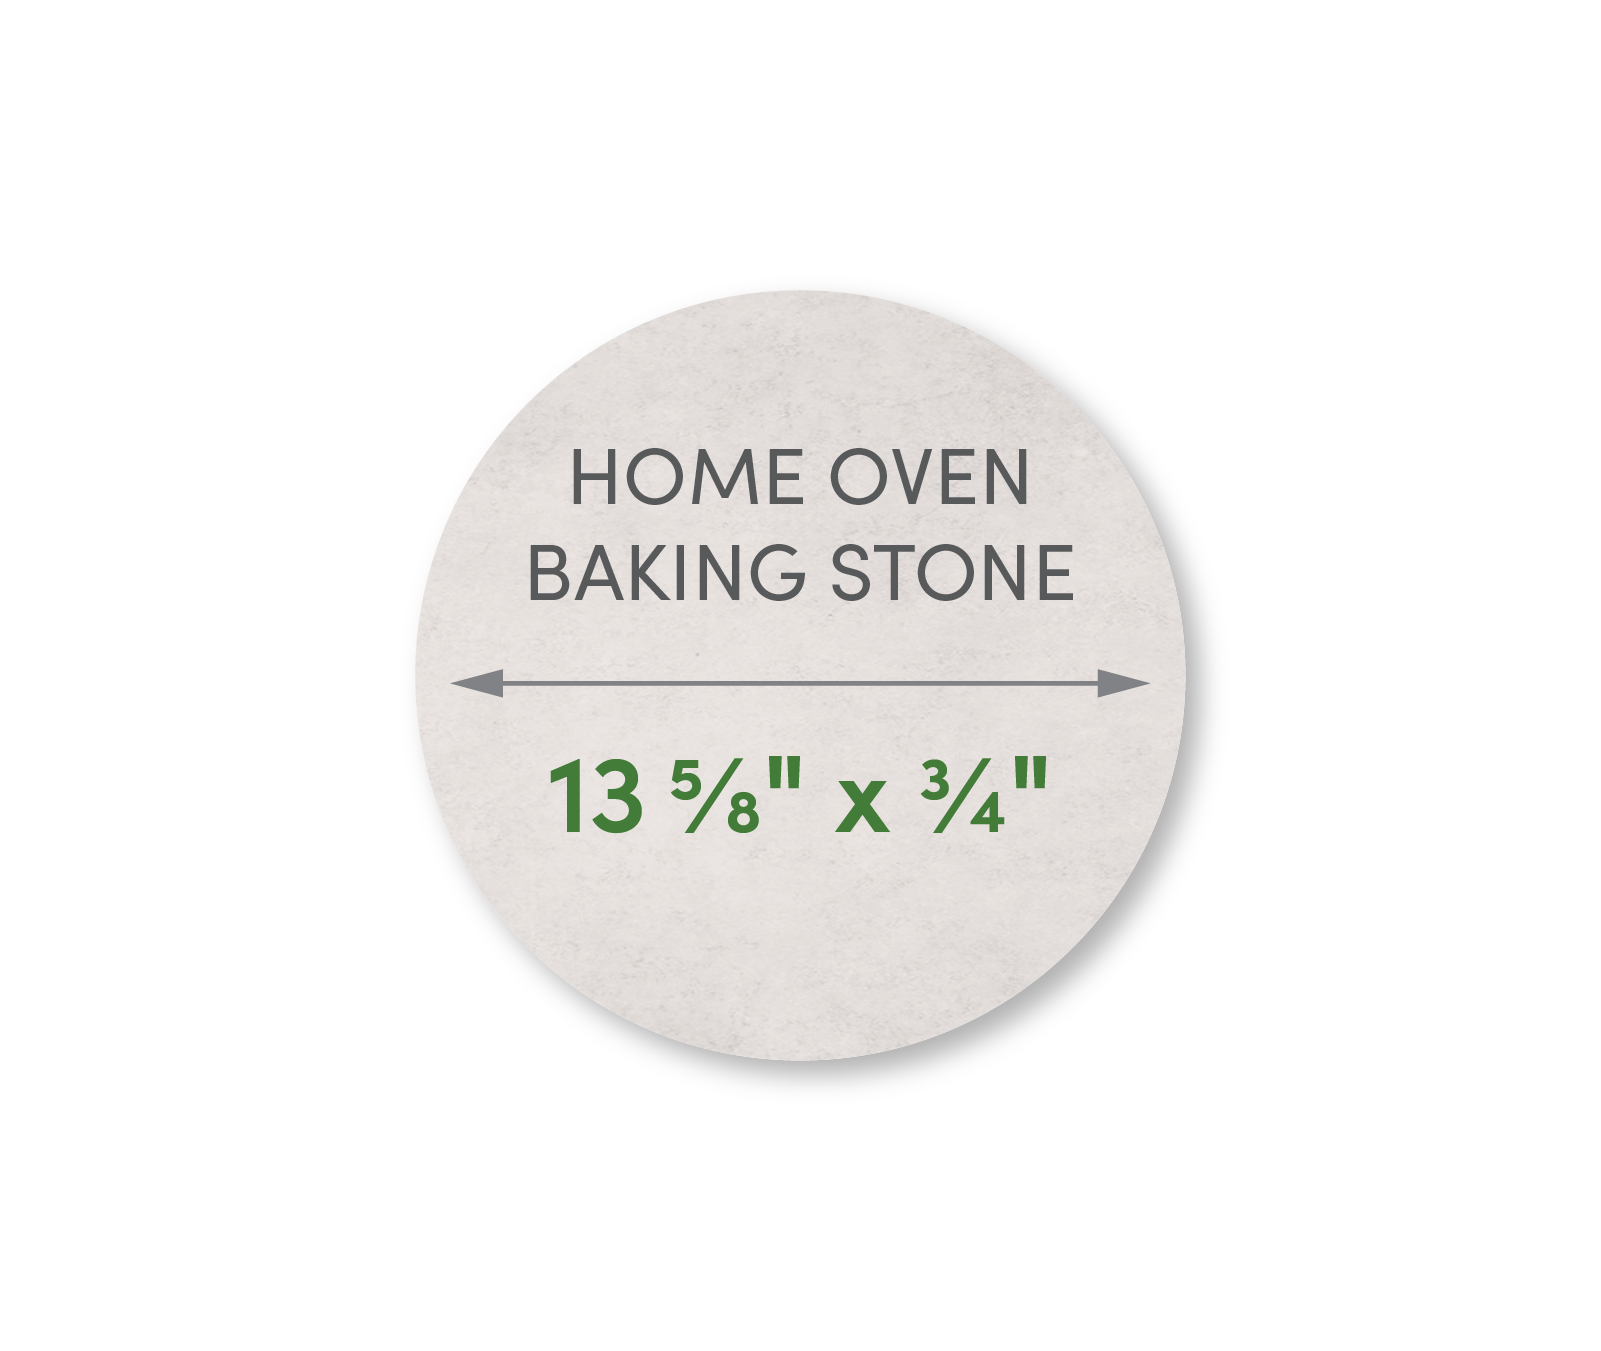 Home Oven Baking Stone 13 5/8" Diameter